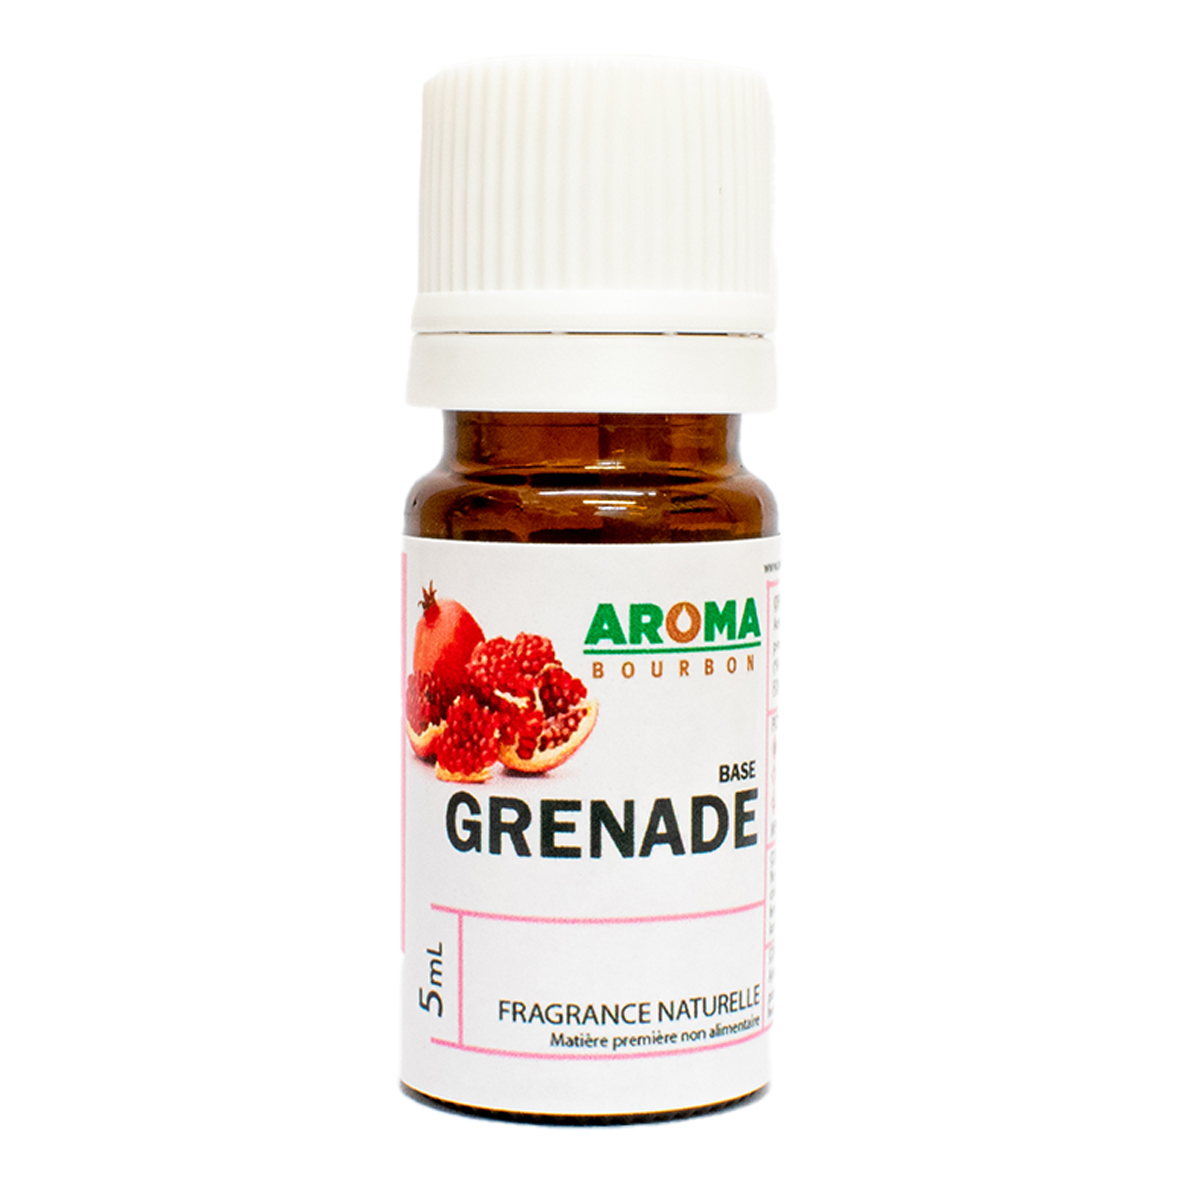 GRENADE - Fragrance naturelle